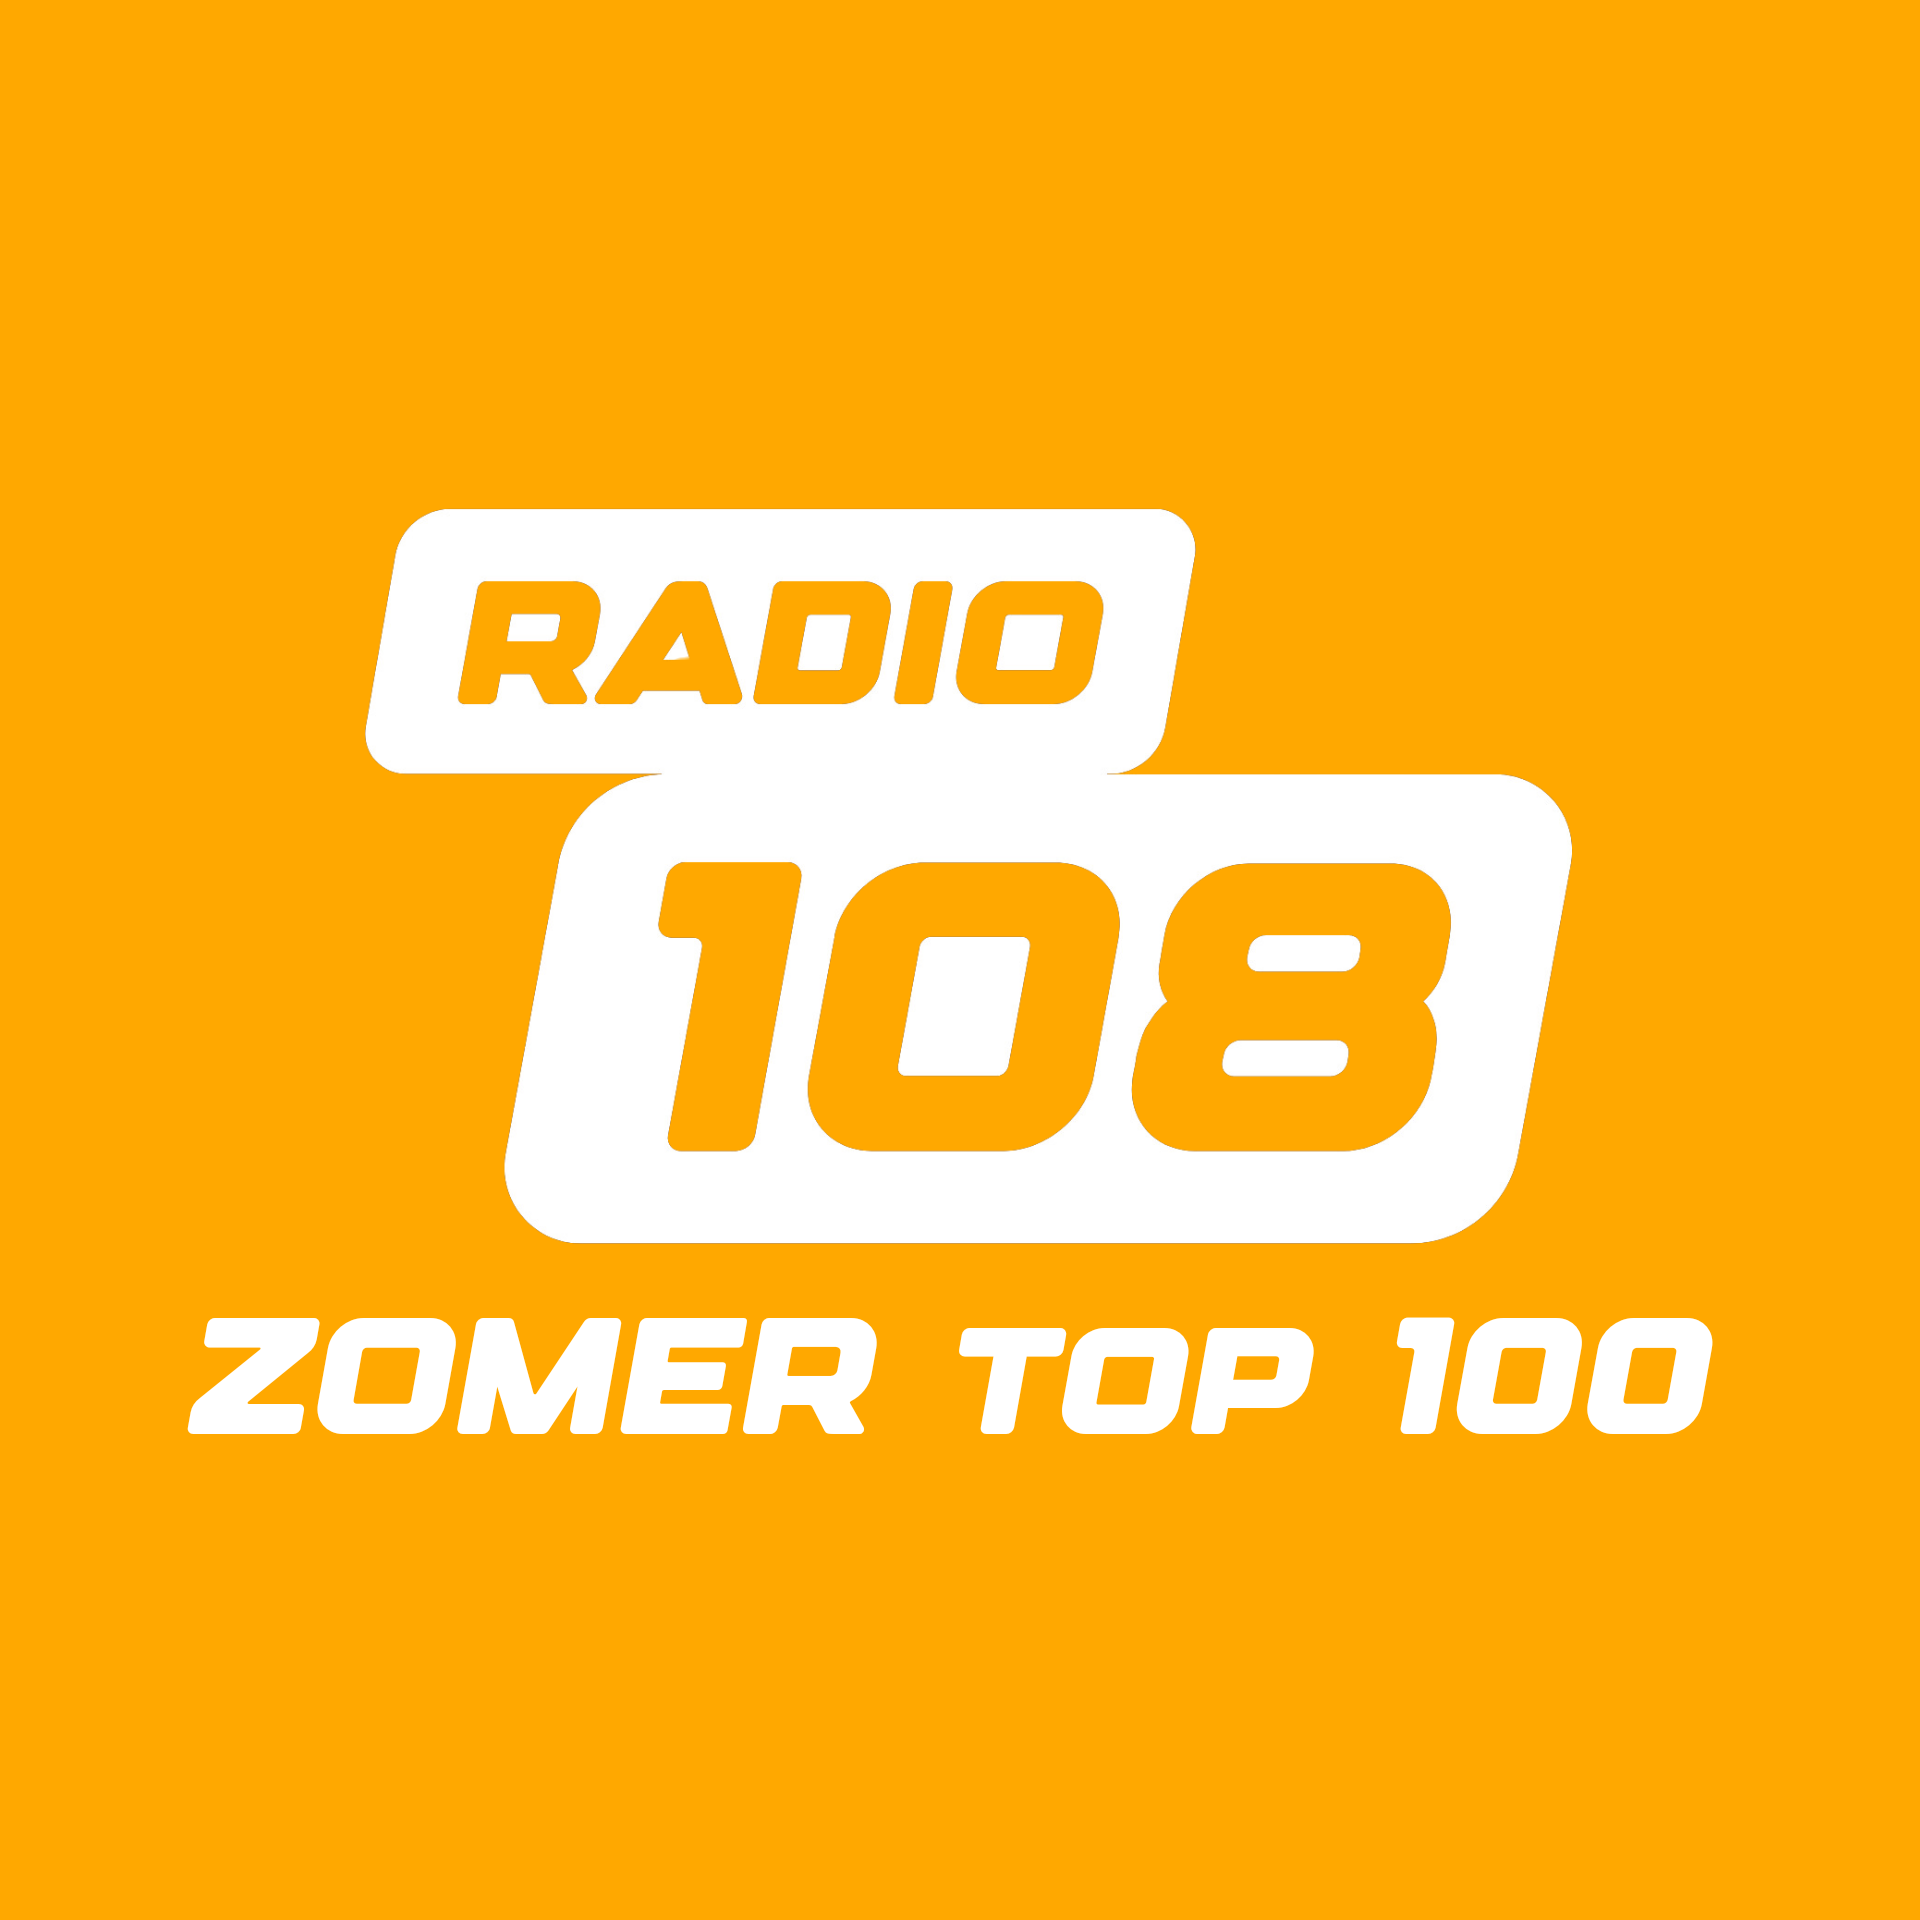 RADIO 108 - ZOMER TOP 100